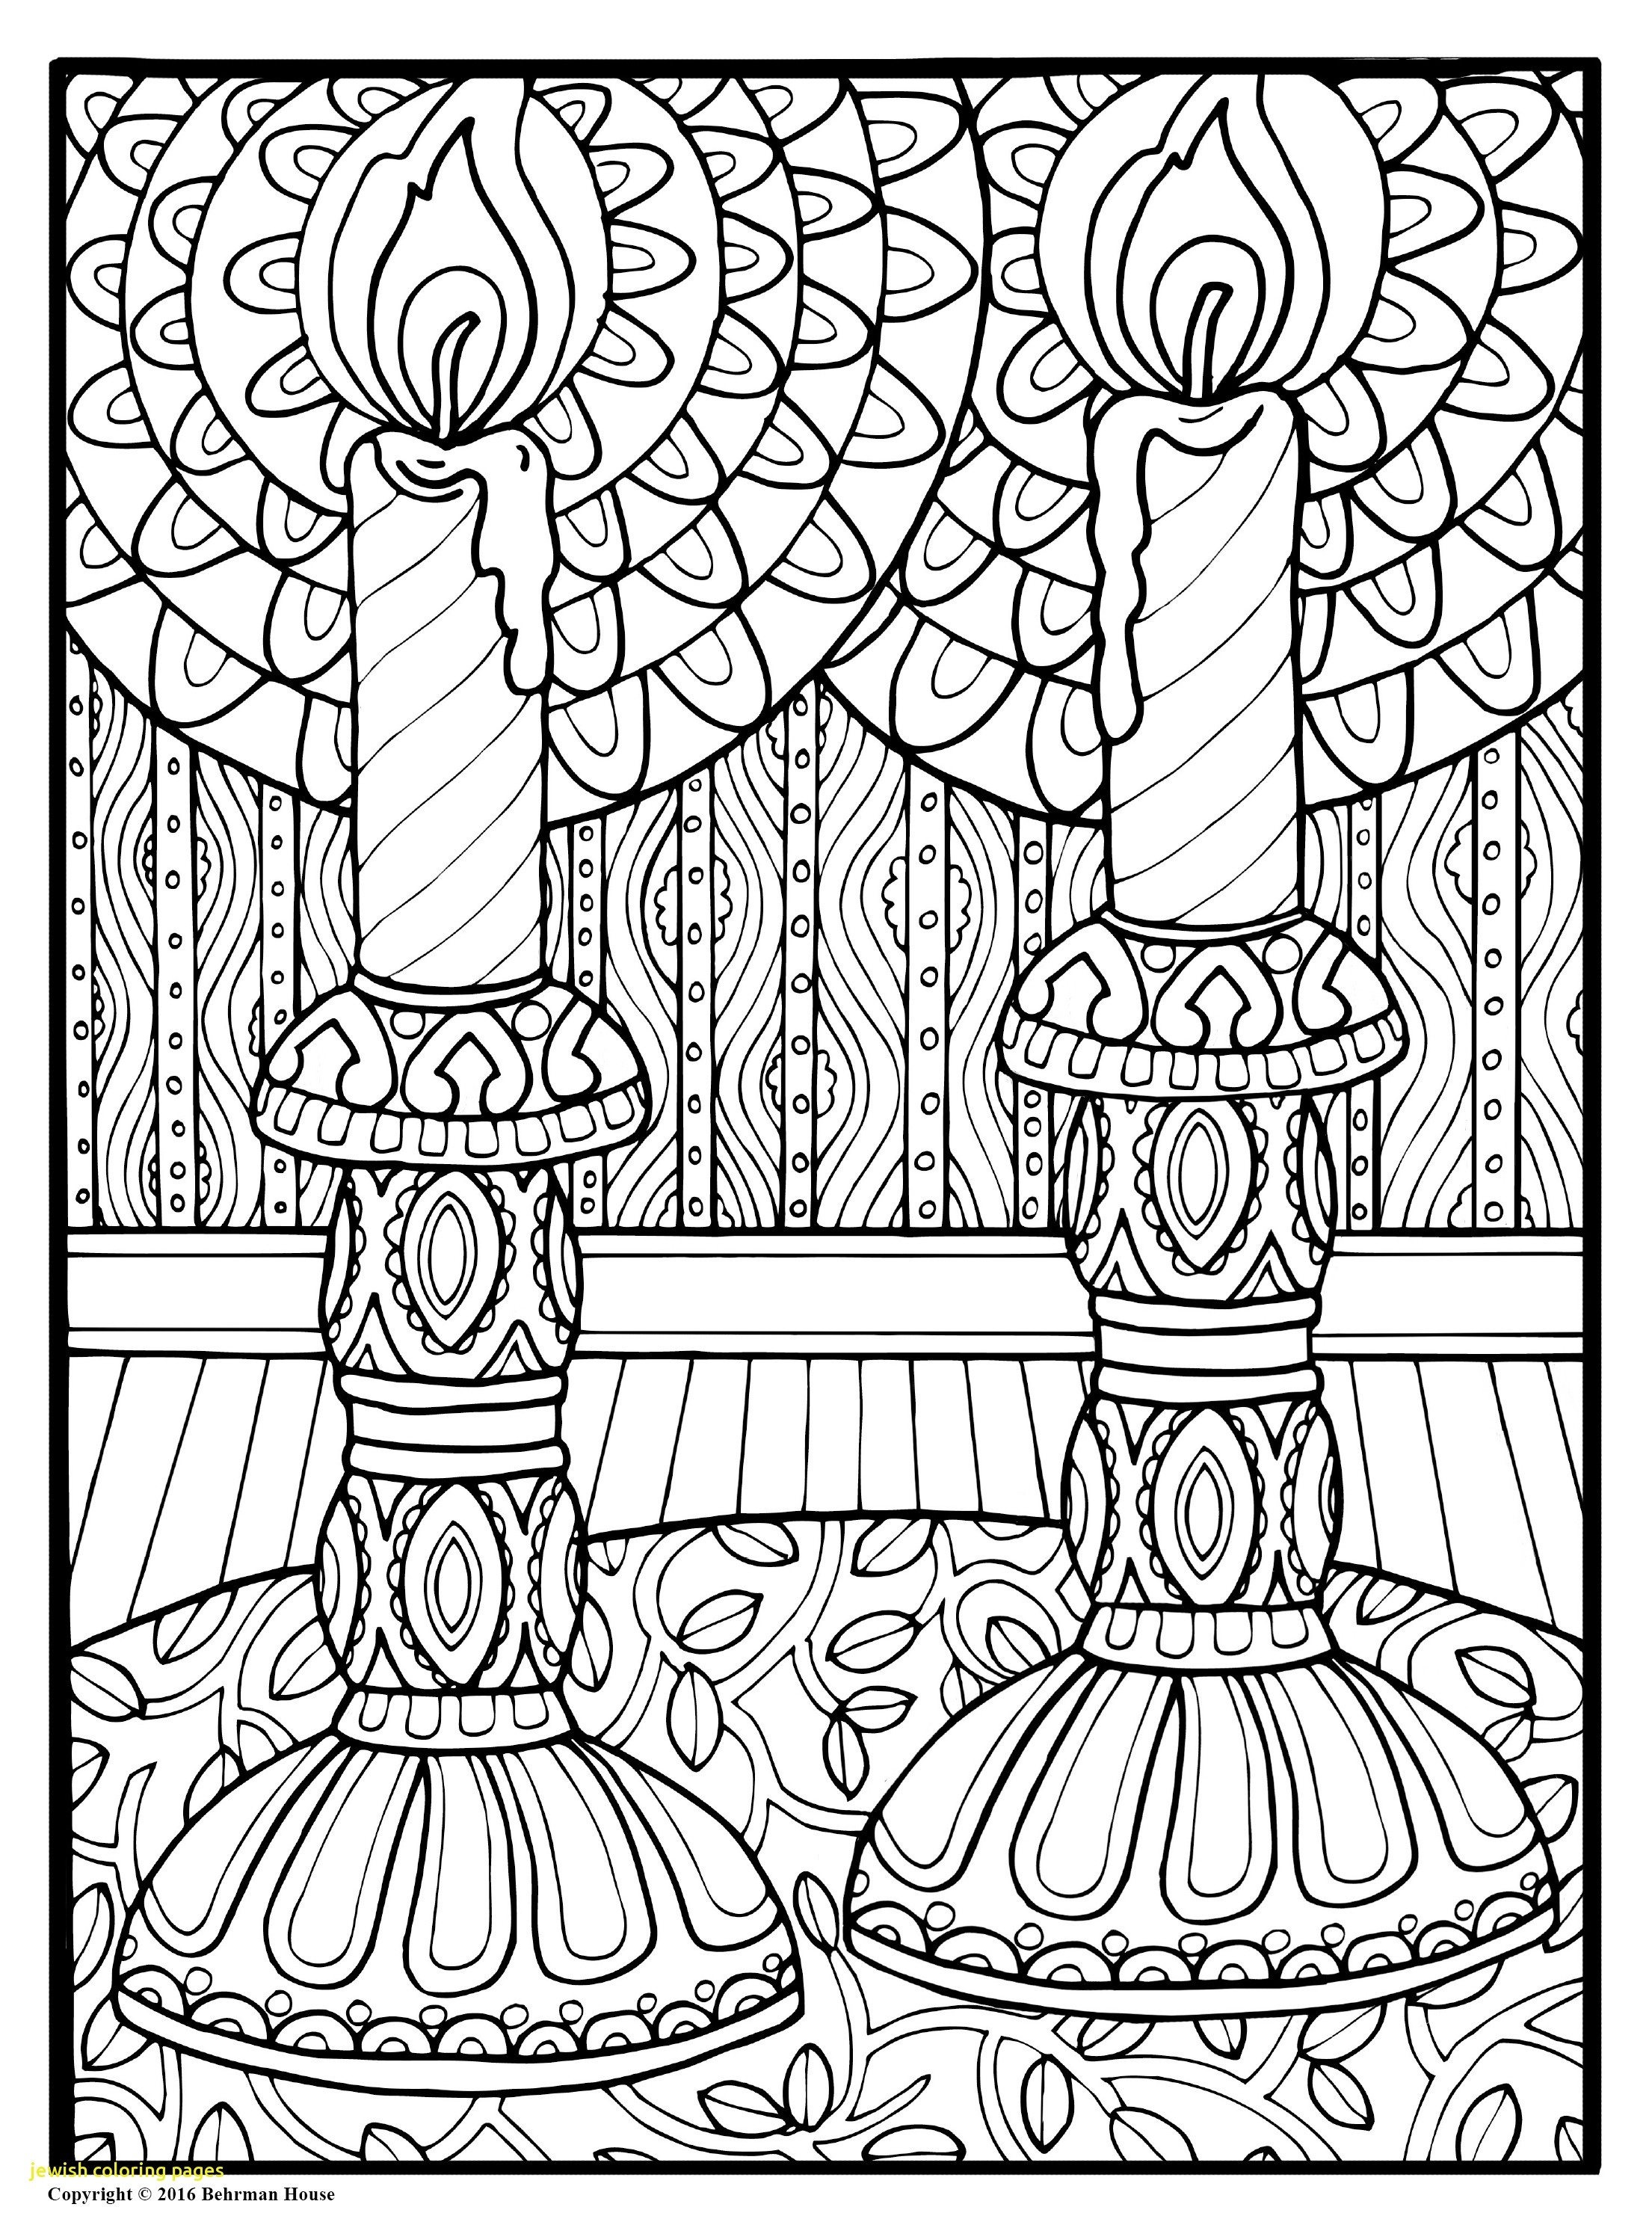 Sukkot Coloring Pages at GetColorings.com | Free printable ...